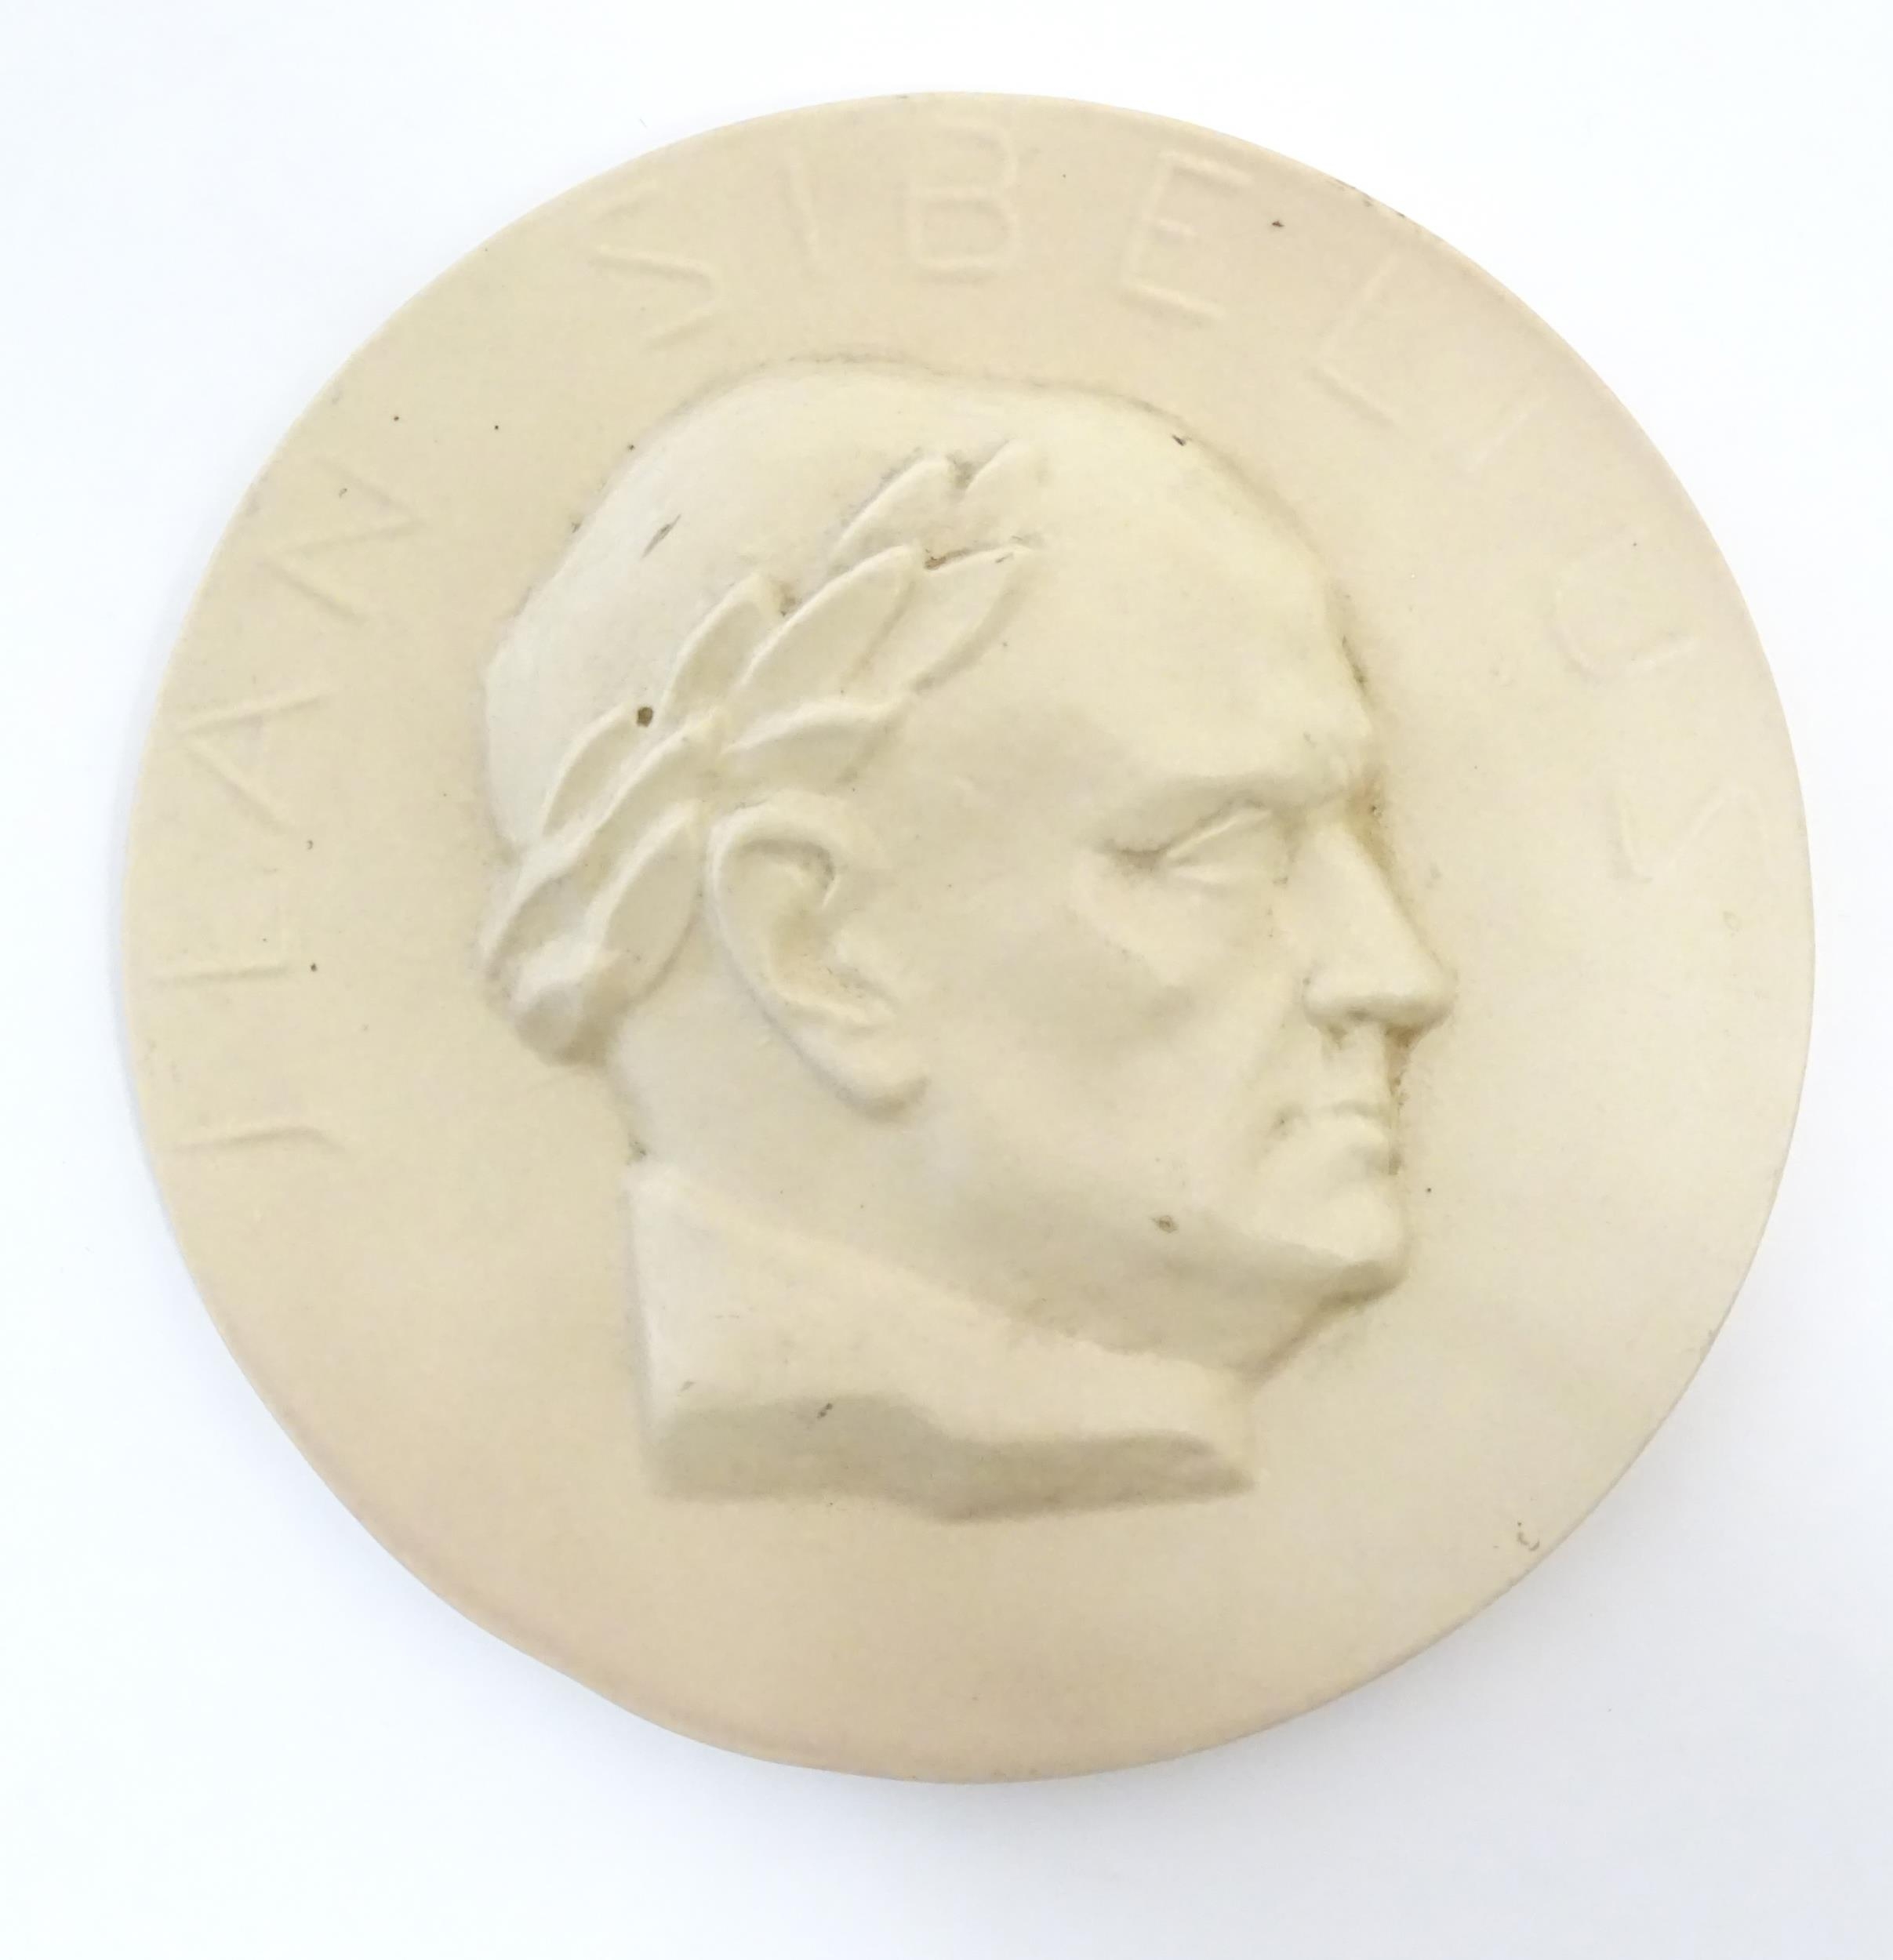 A 20thC Arabia ceramic roundel / plaque depicting a portrait of the Finnish composer Jean Sibelius